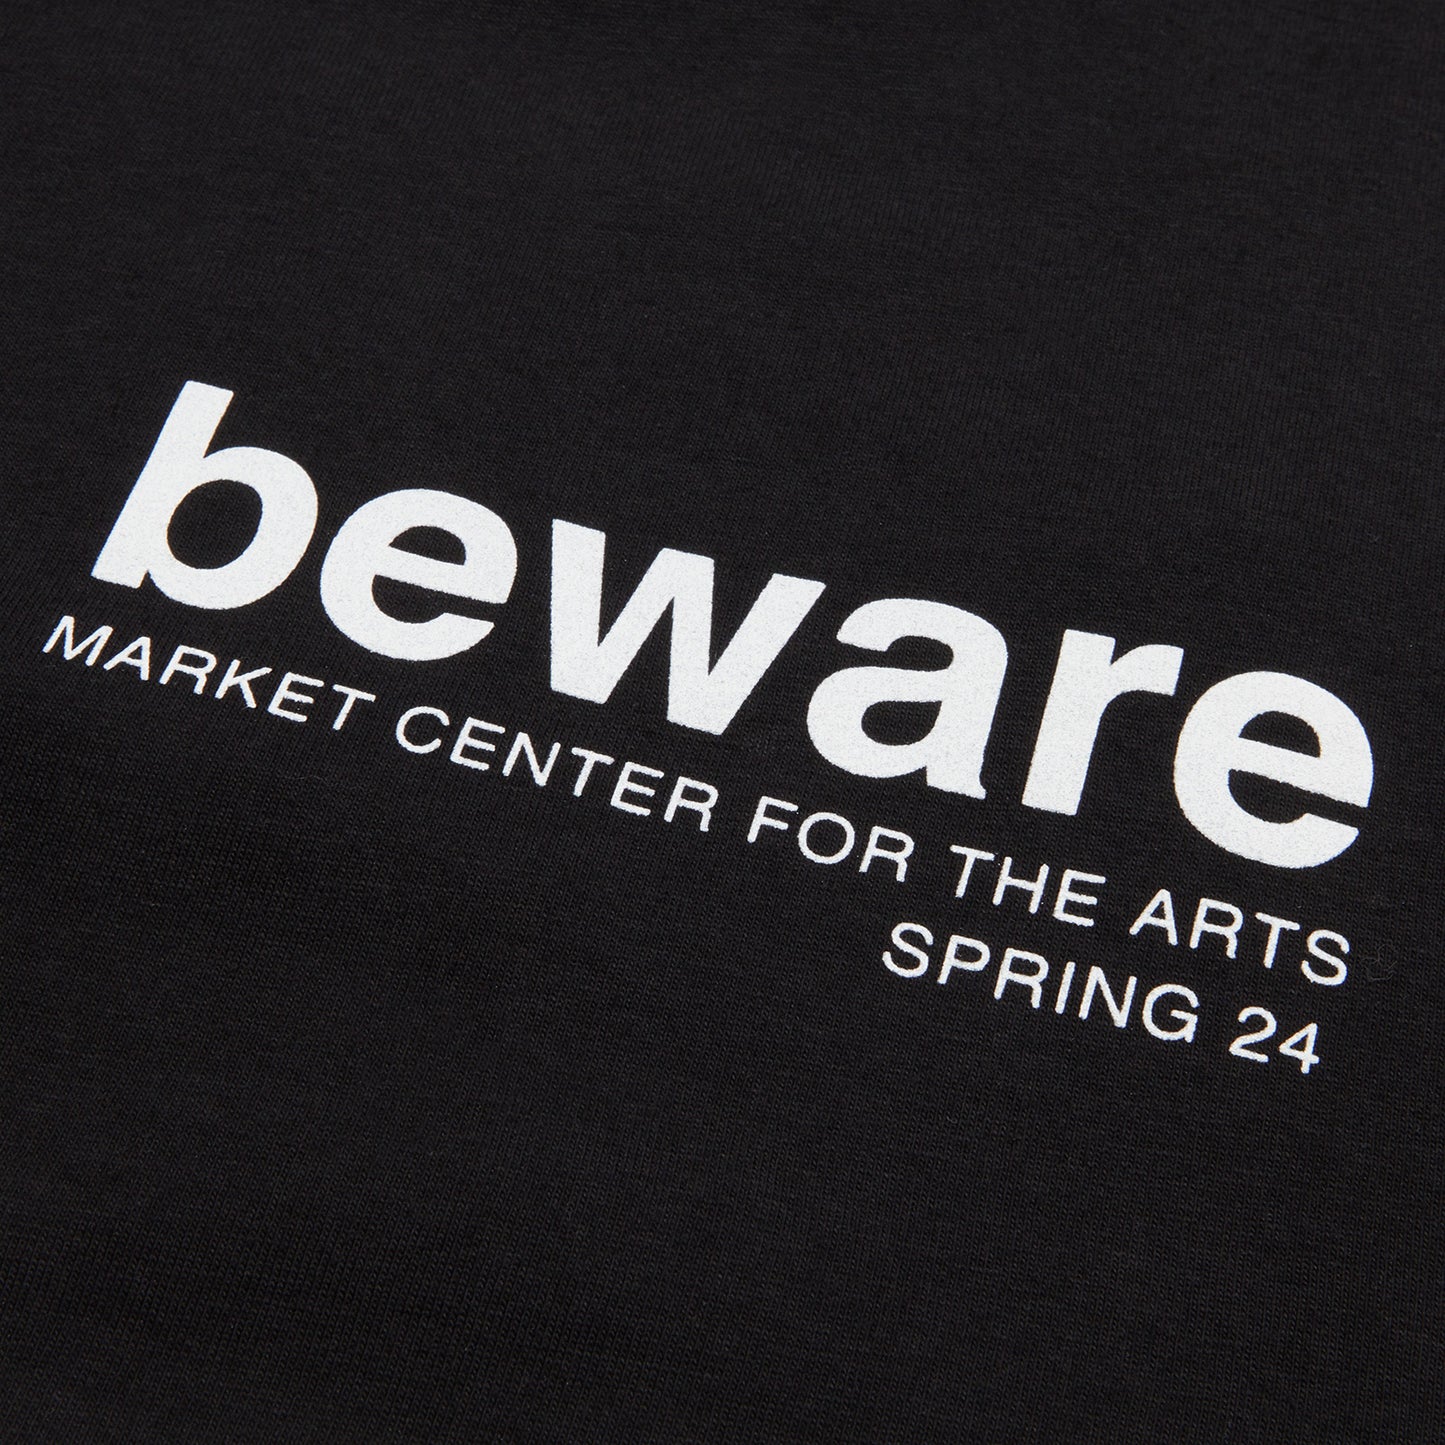 Market Center for The Arts T-Shirt (Black)